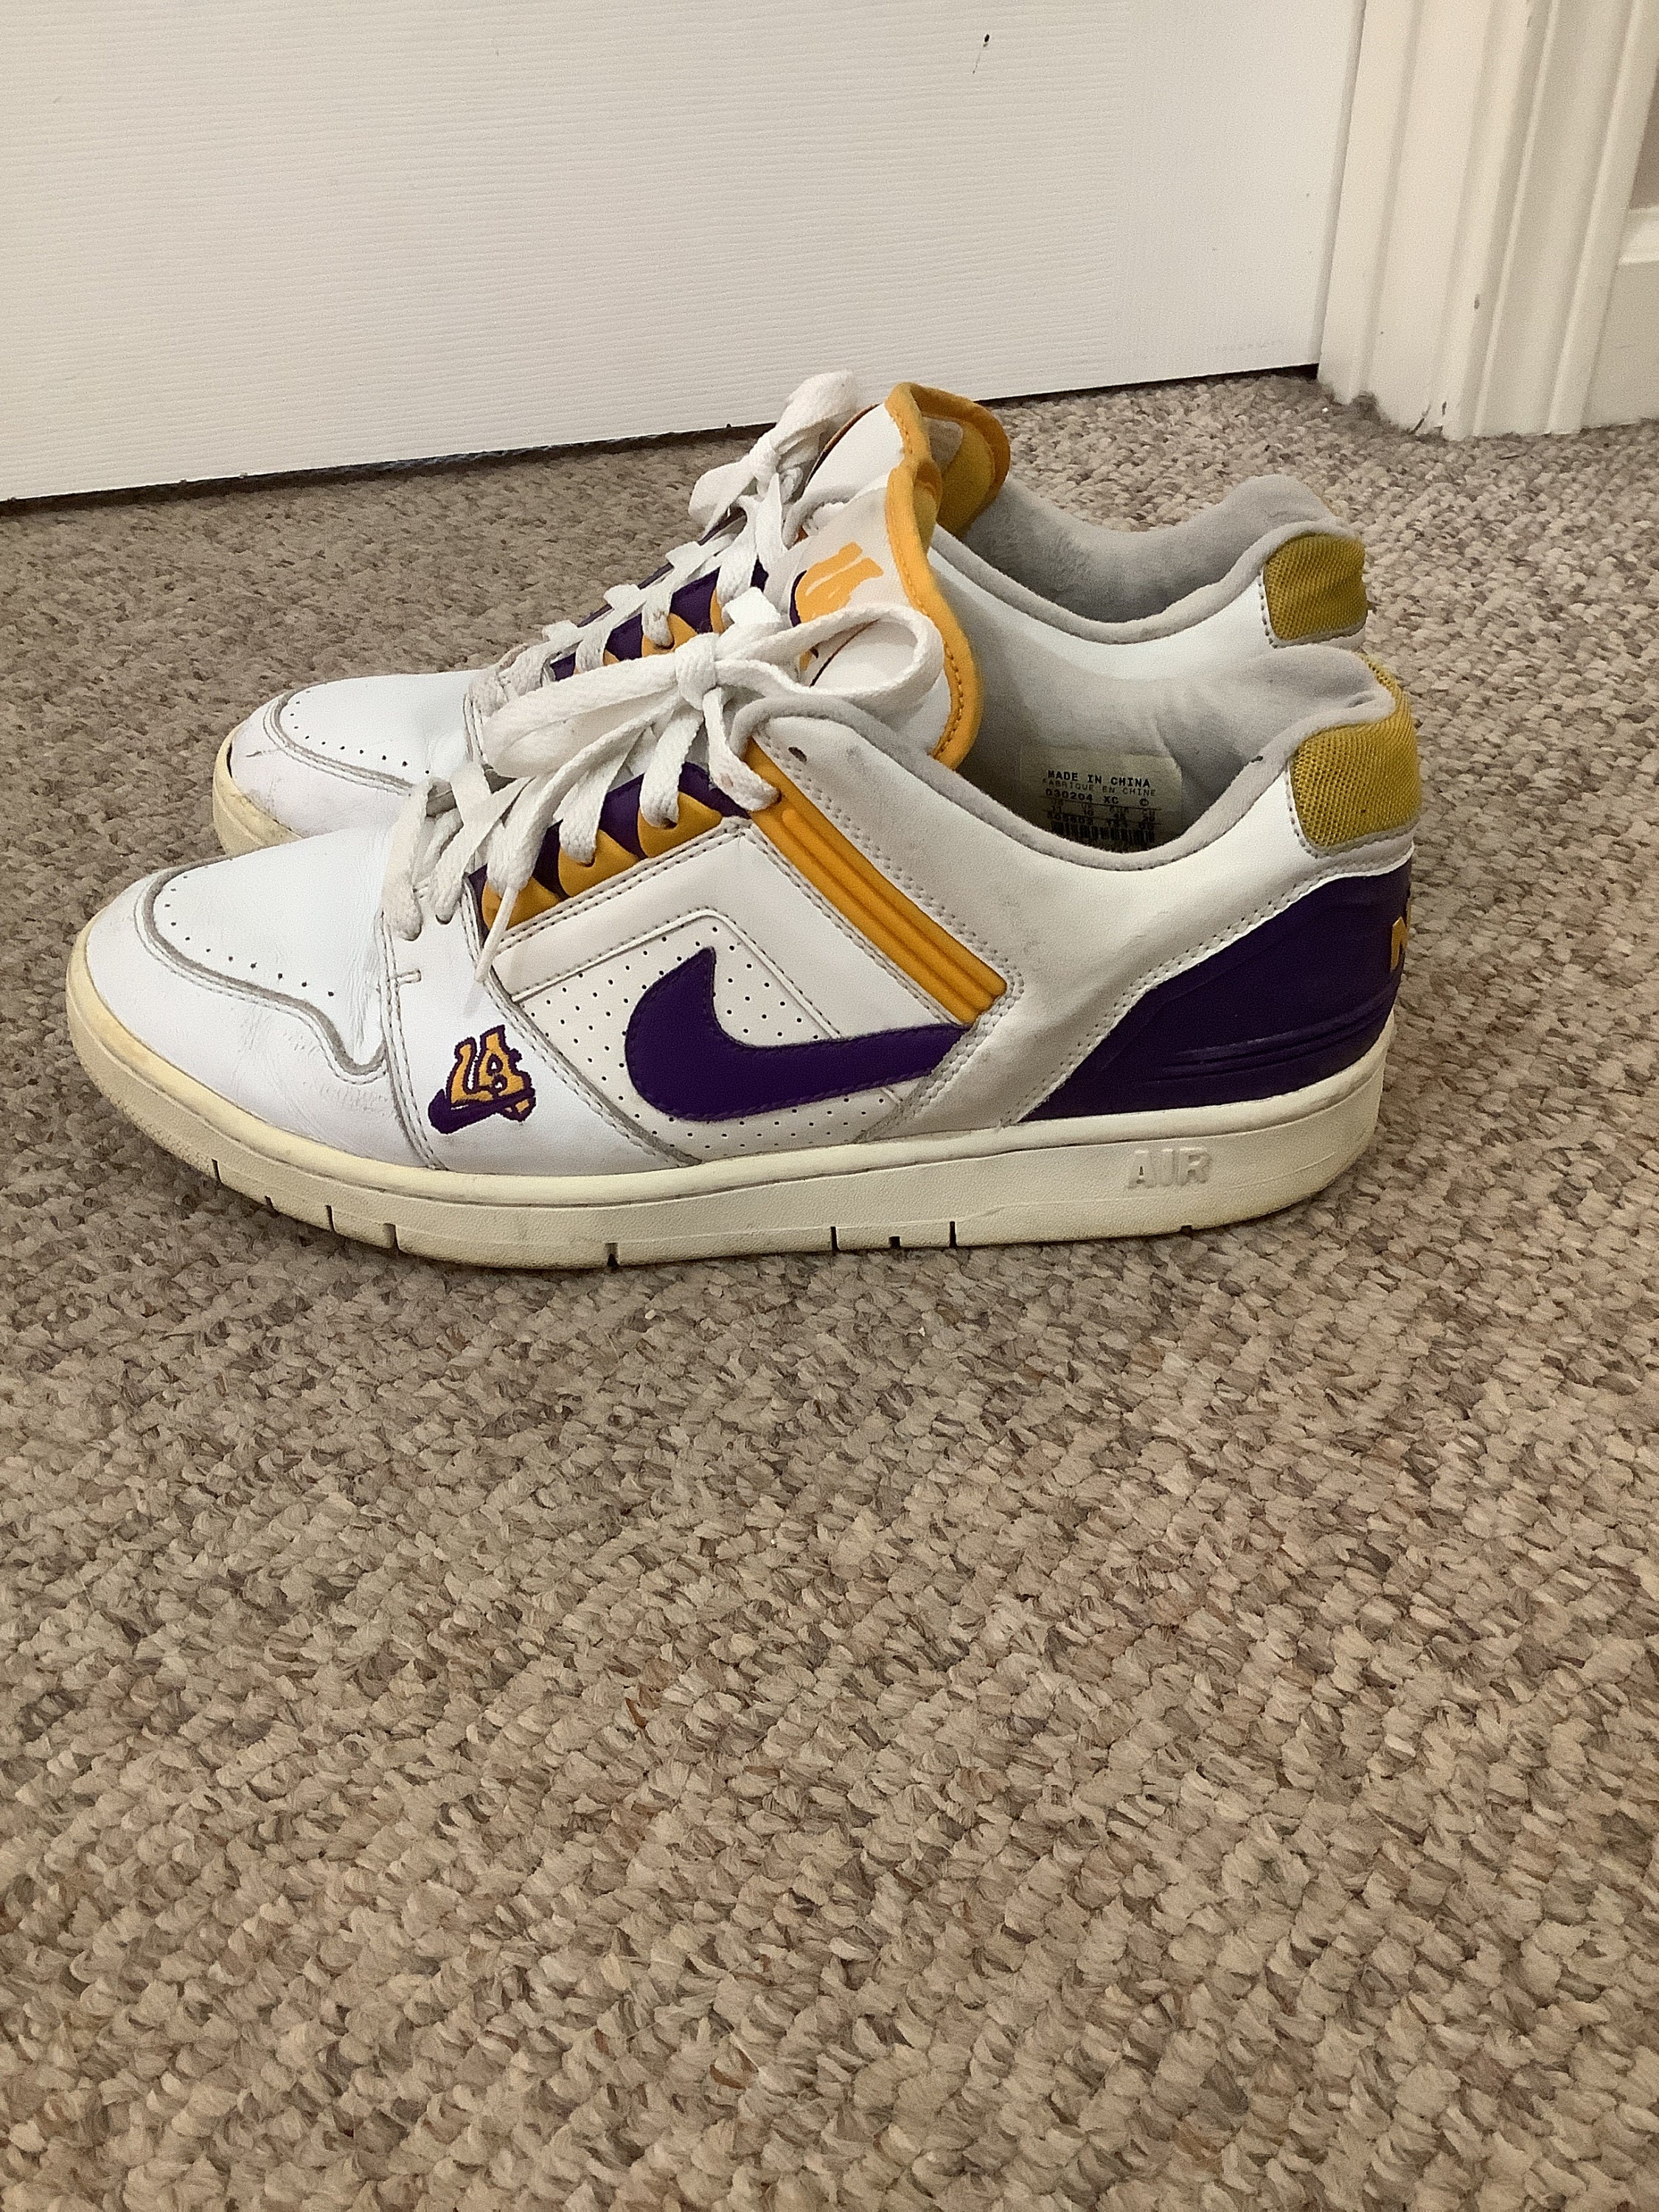 NIKE Kobe Bryant Throw Back L A LAKERS Purple Gold Sneakers Boys Shoes Sz  4.5